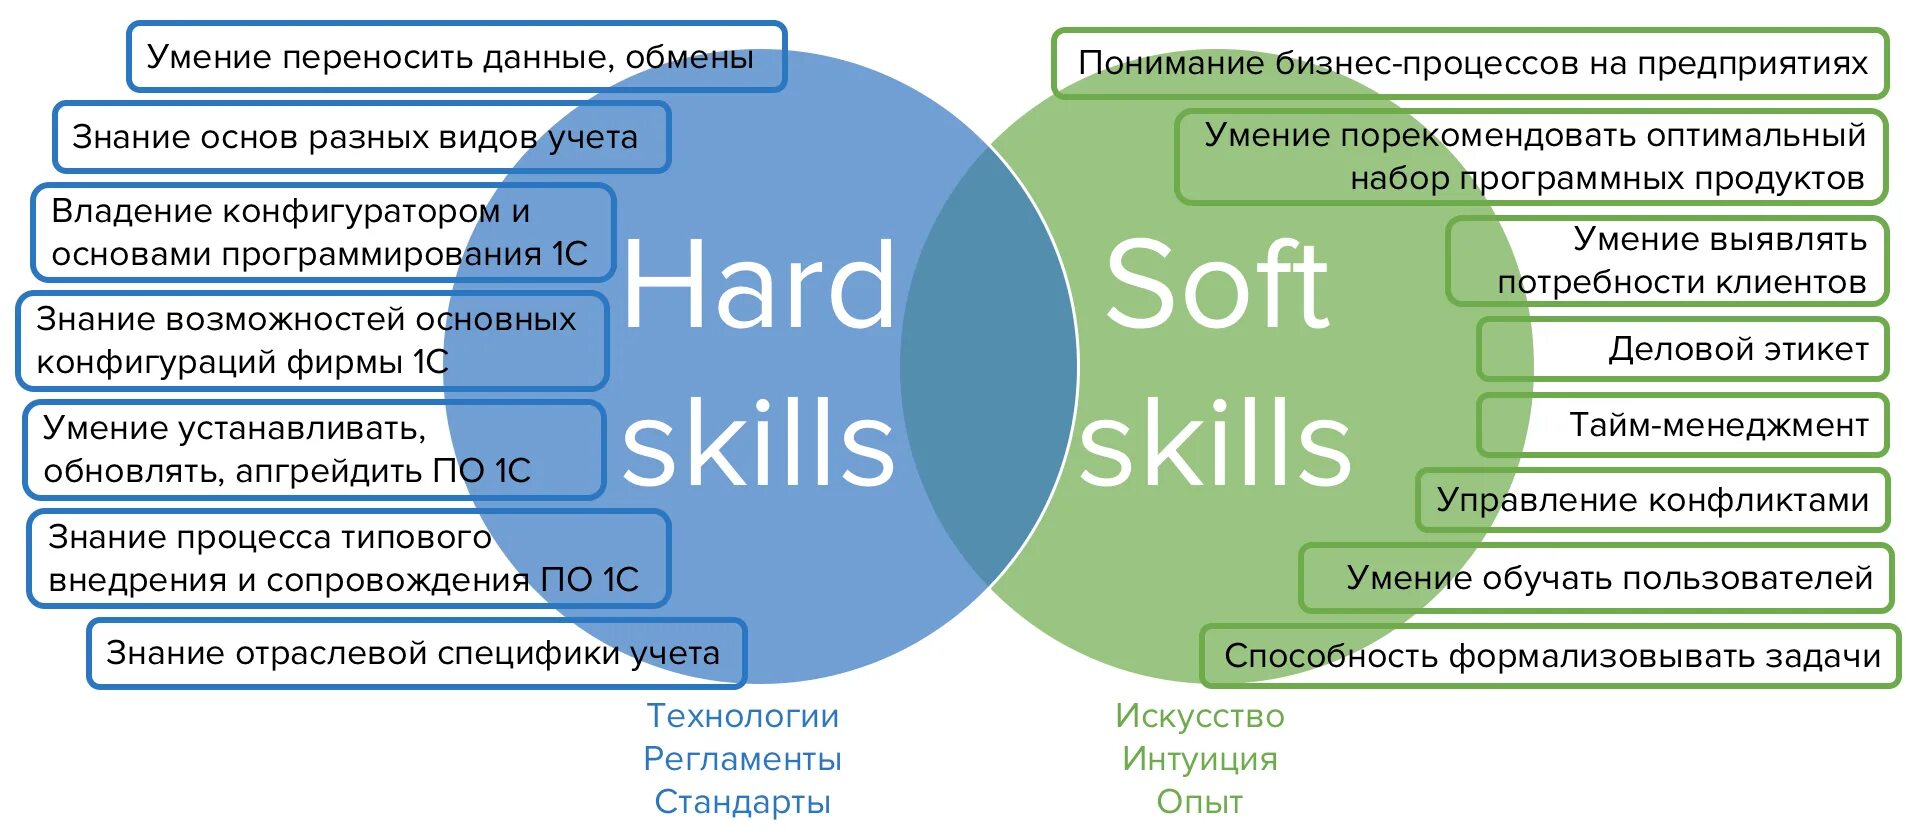 Hard skills и Soft skills. Навыки Хард и софт Скиллс. Компетенции педагога hard skills Soft skills. Софт и Хард компетенции.